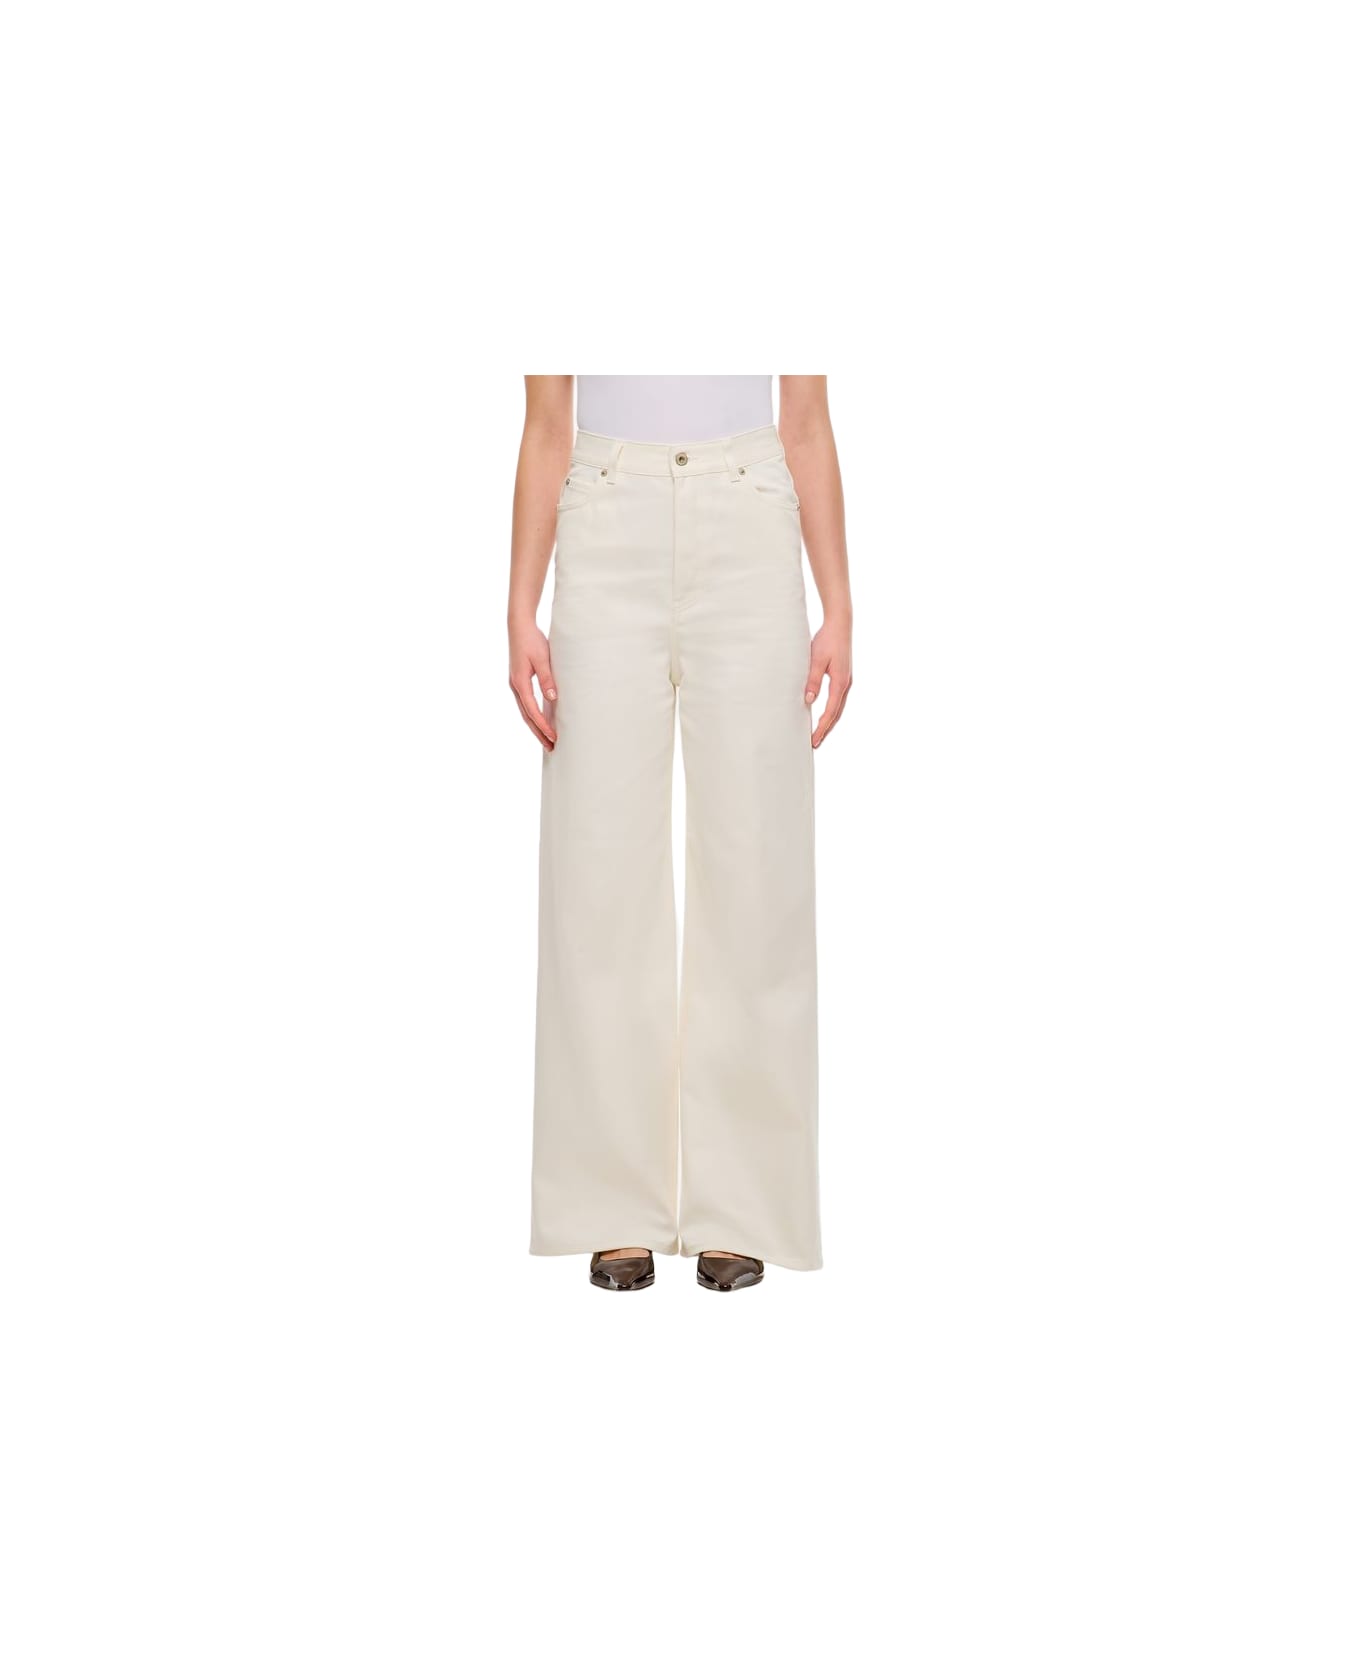 Loewe High Waisted Jeans - White